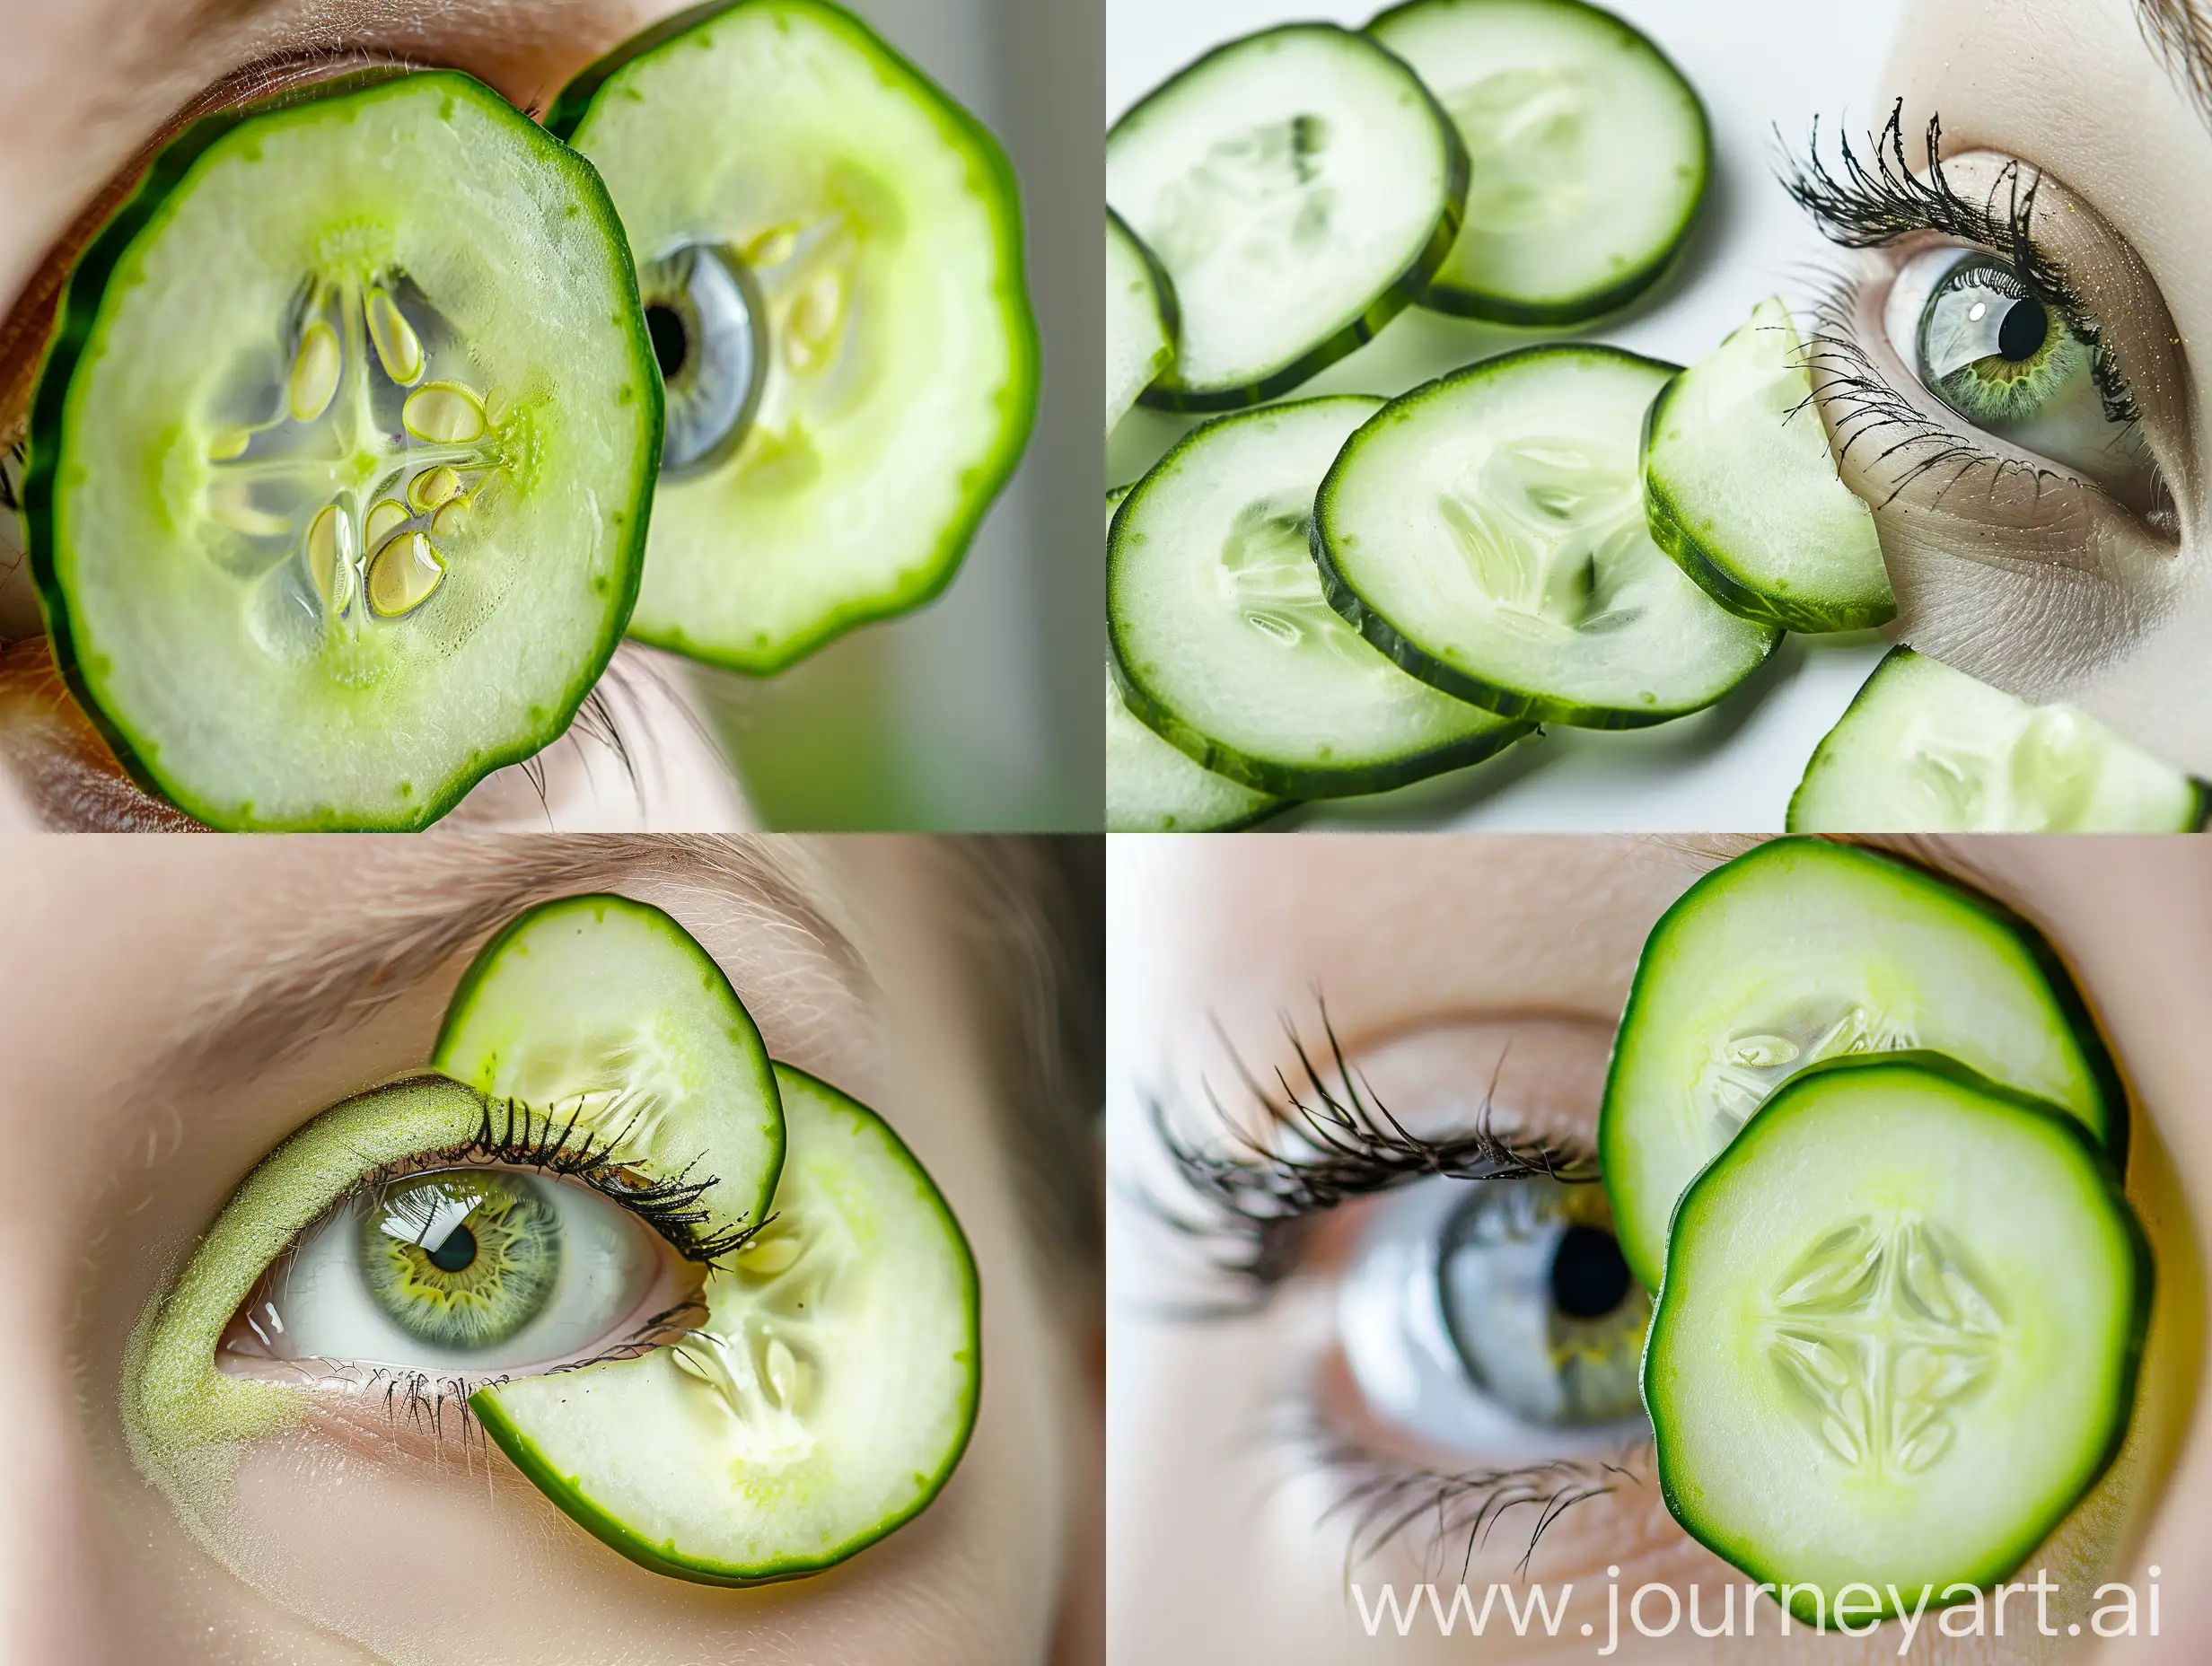 Fresh-Cucumber-Slices-on-Eye-for-Natural-Skincare